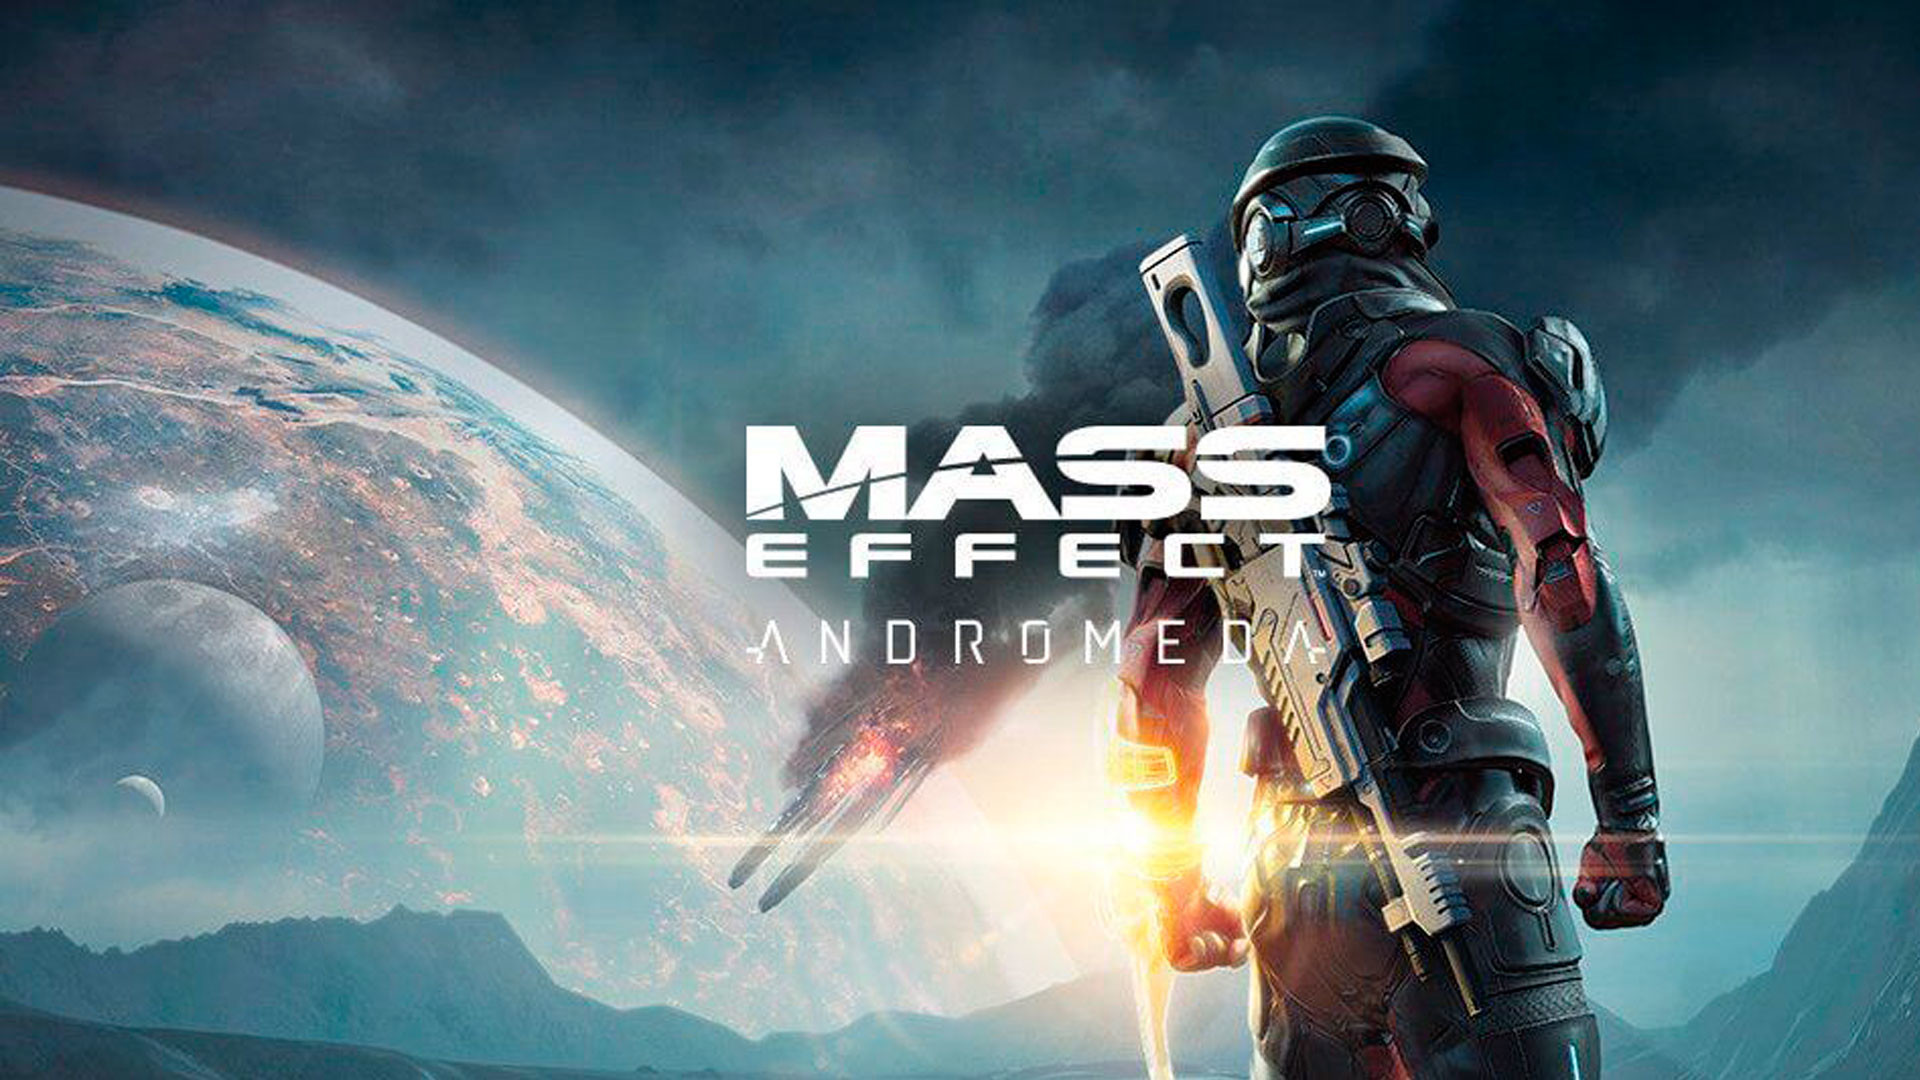 1920x1080 Wallpaper HD Mass Effect Andromeda #MassEffect4 #MassEffectAndromeda #EA  #ElectronicArts #Rol #